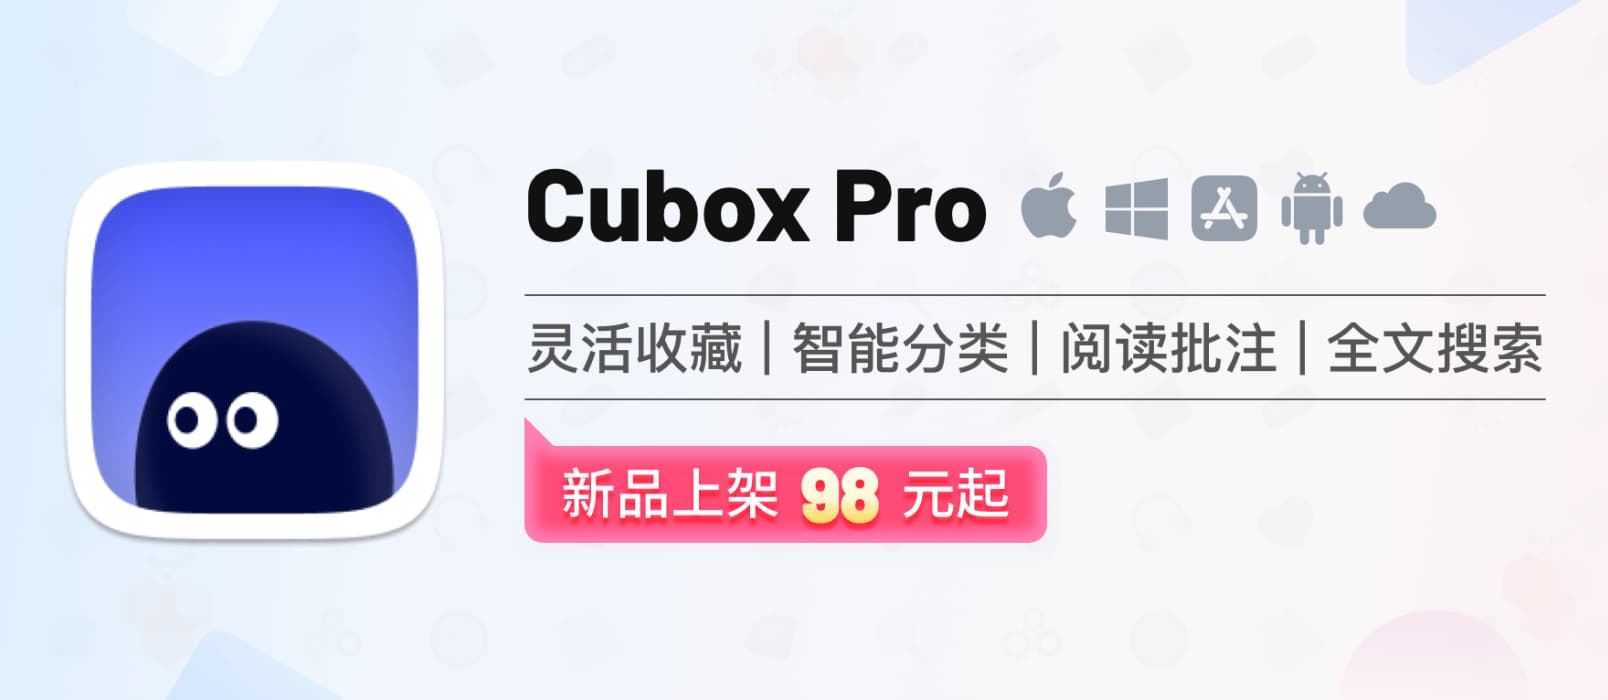 Cubox Pro - 一站式信息收藏与阅读管理工具：自动抓取内容、阅读批注、回顾、搜索、管理 1